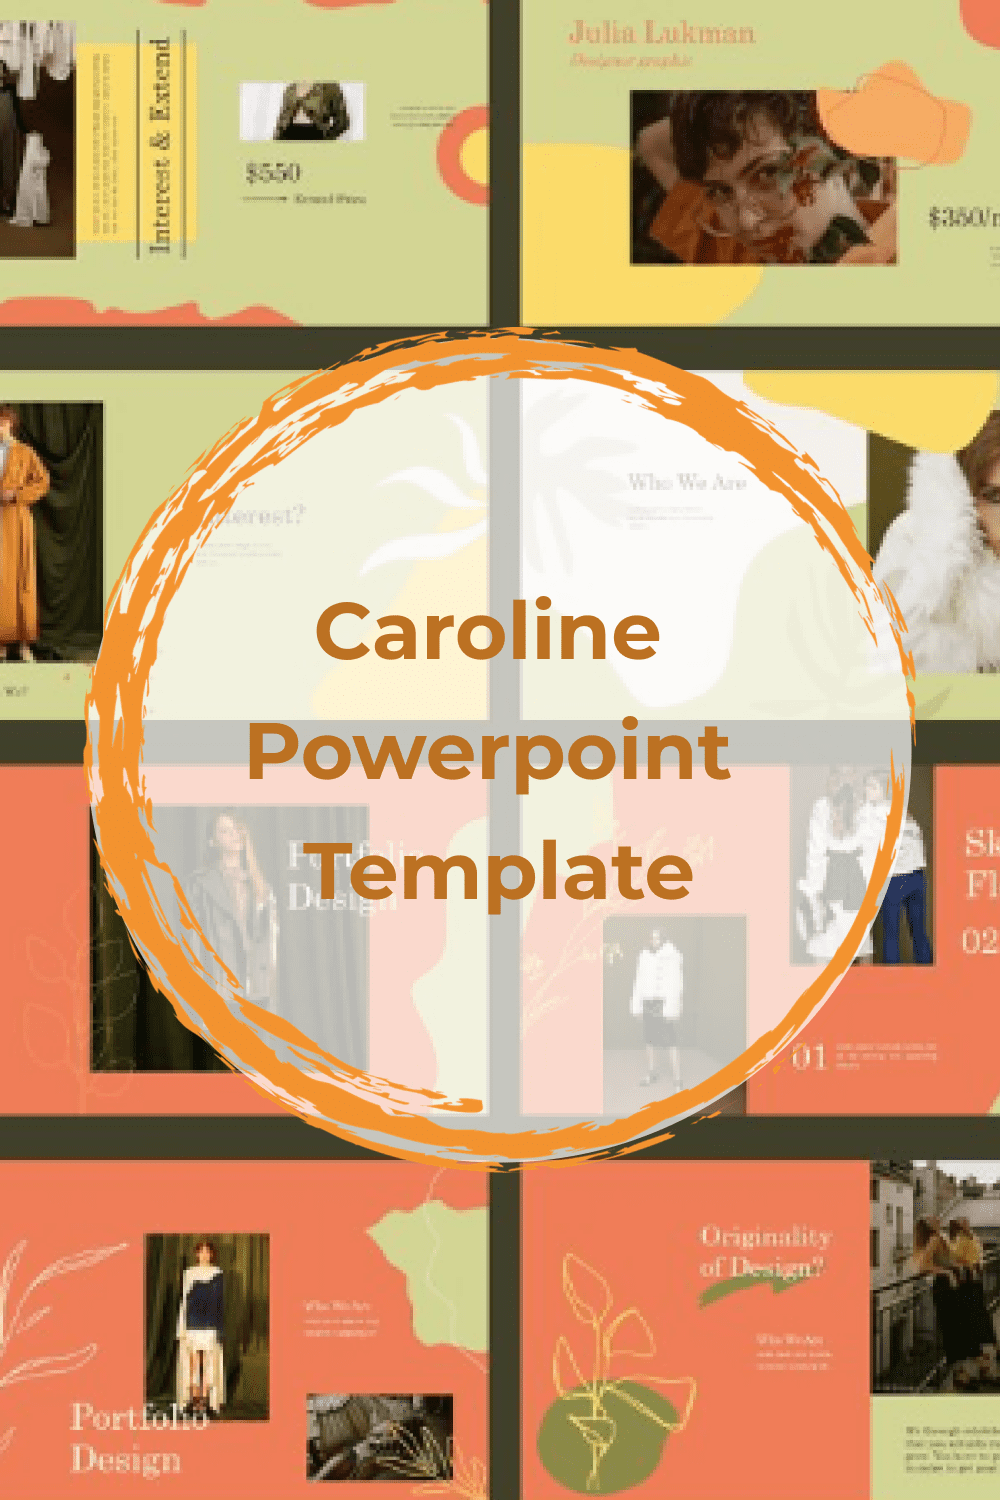 Caroline Powerpoint Template Pinterest.